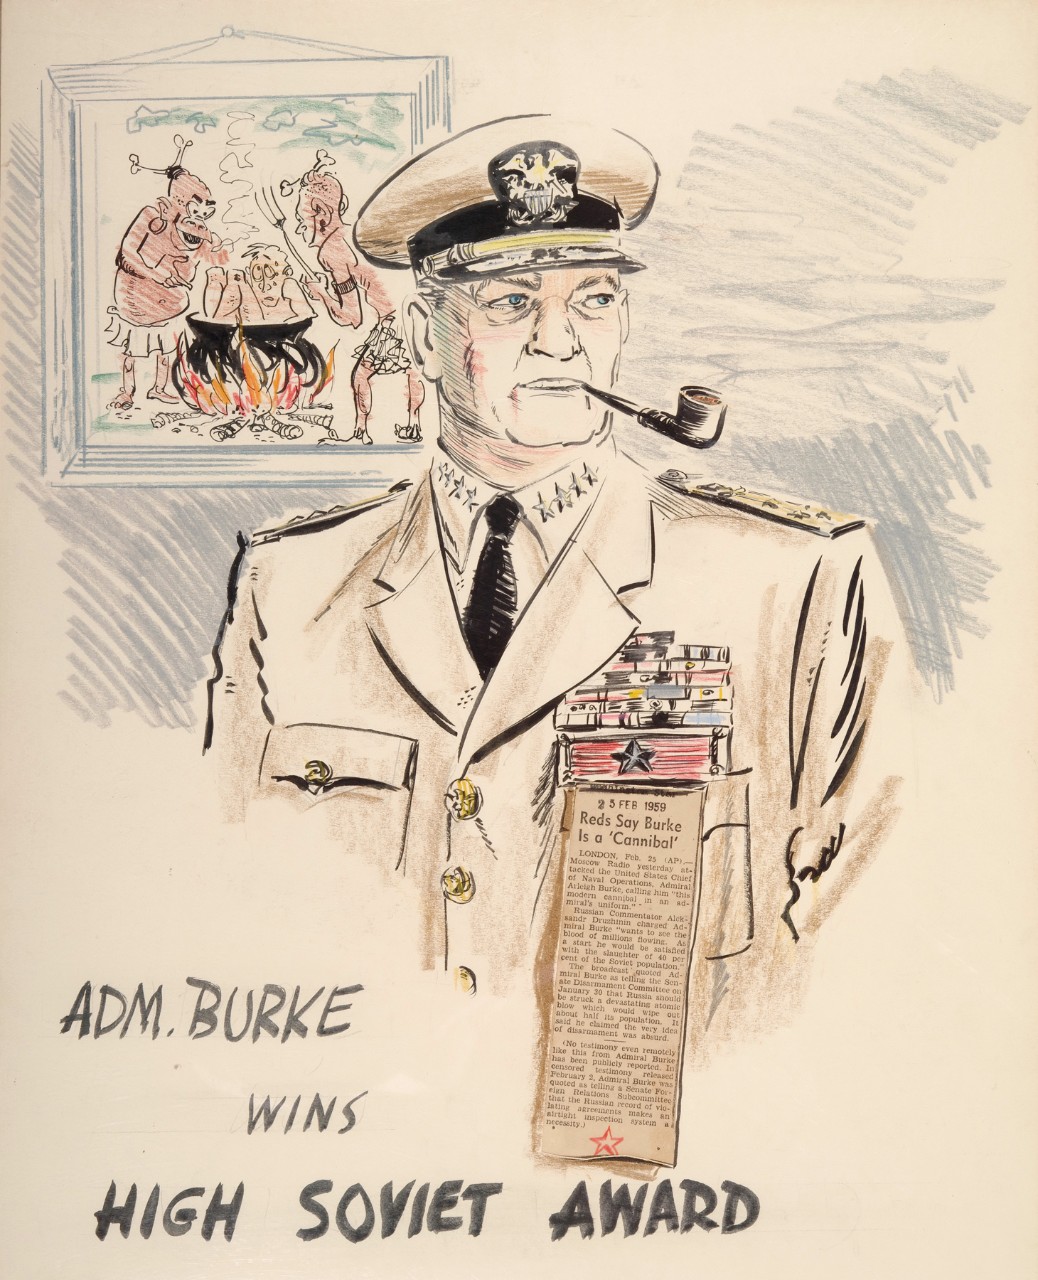 A cartoon of Admiral Burke